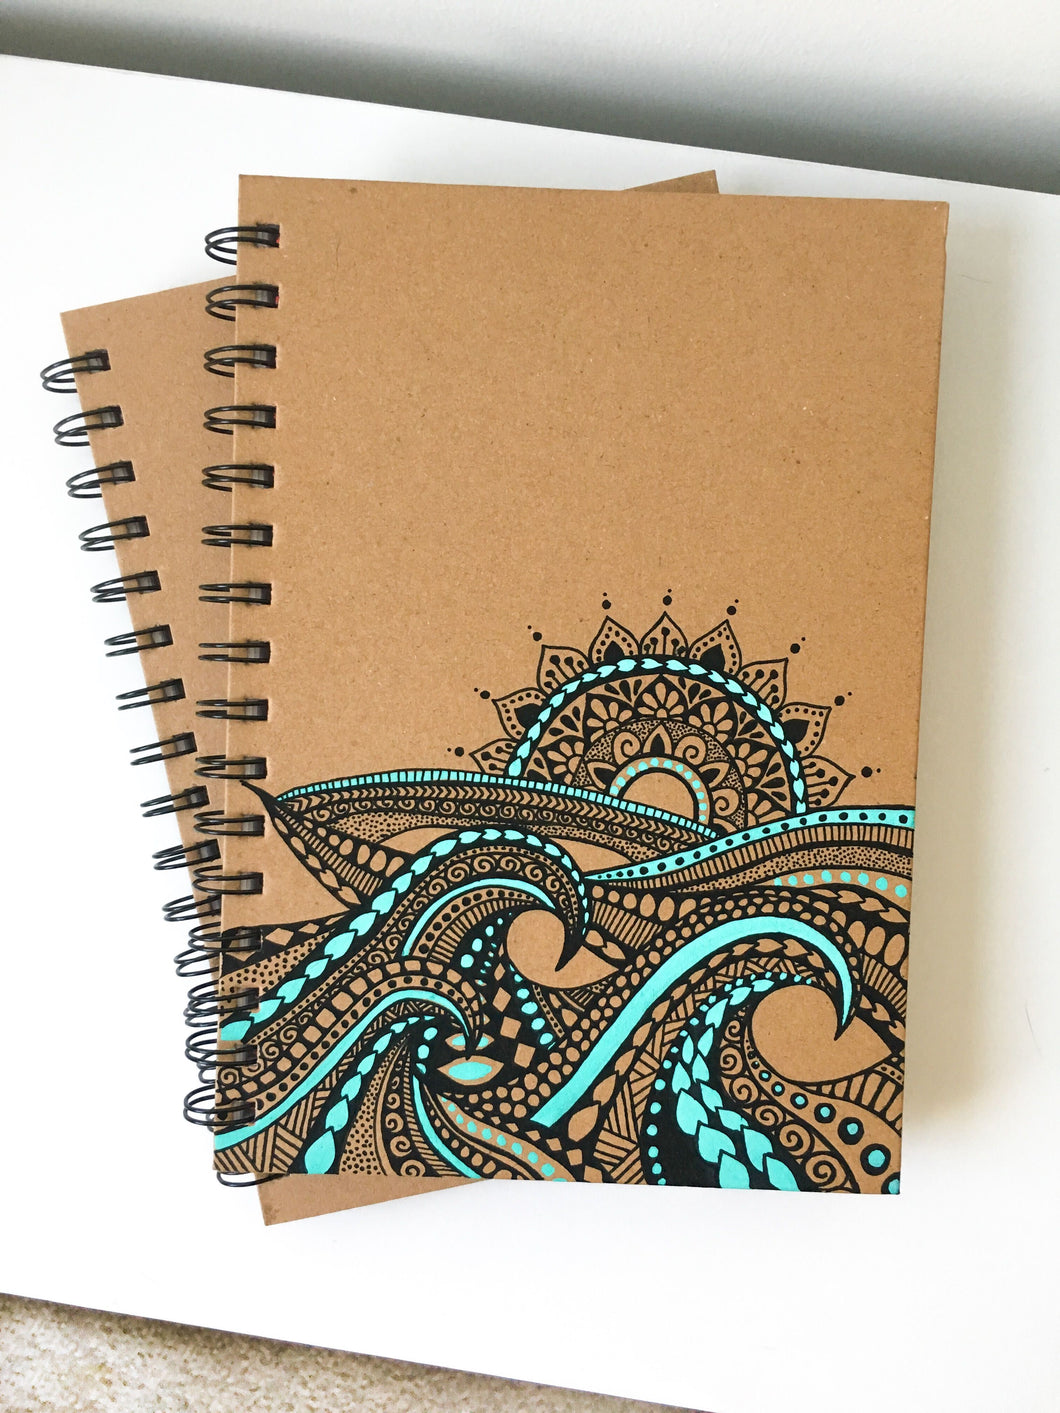 Waves Notebook